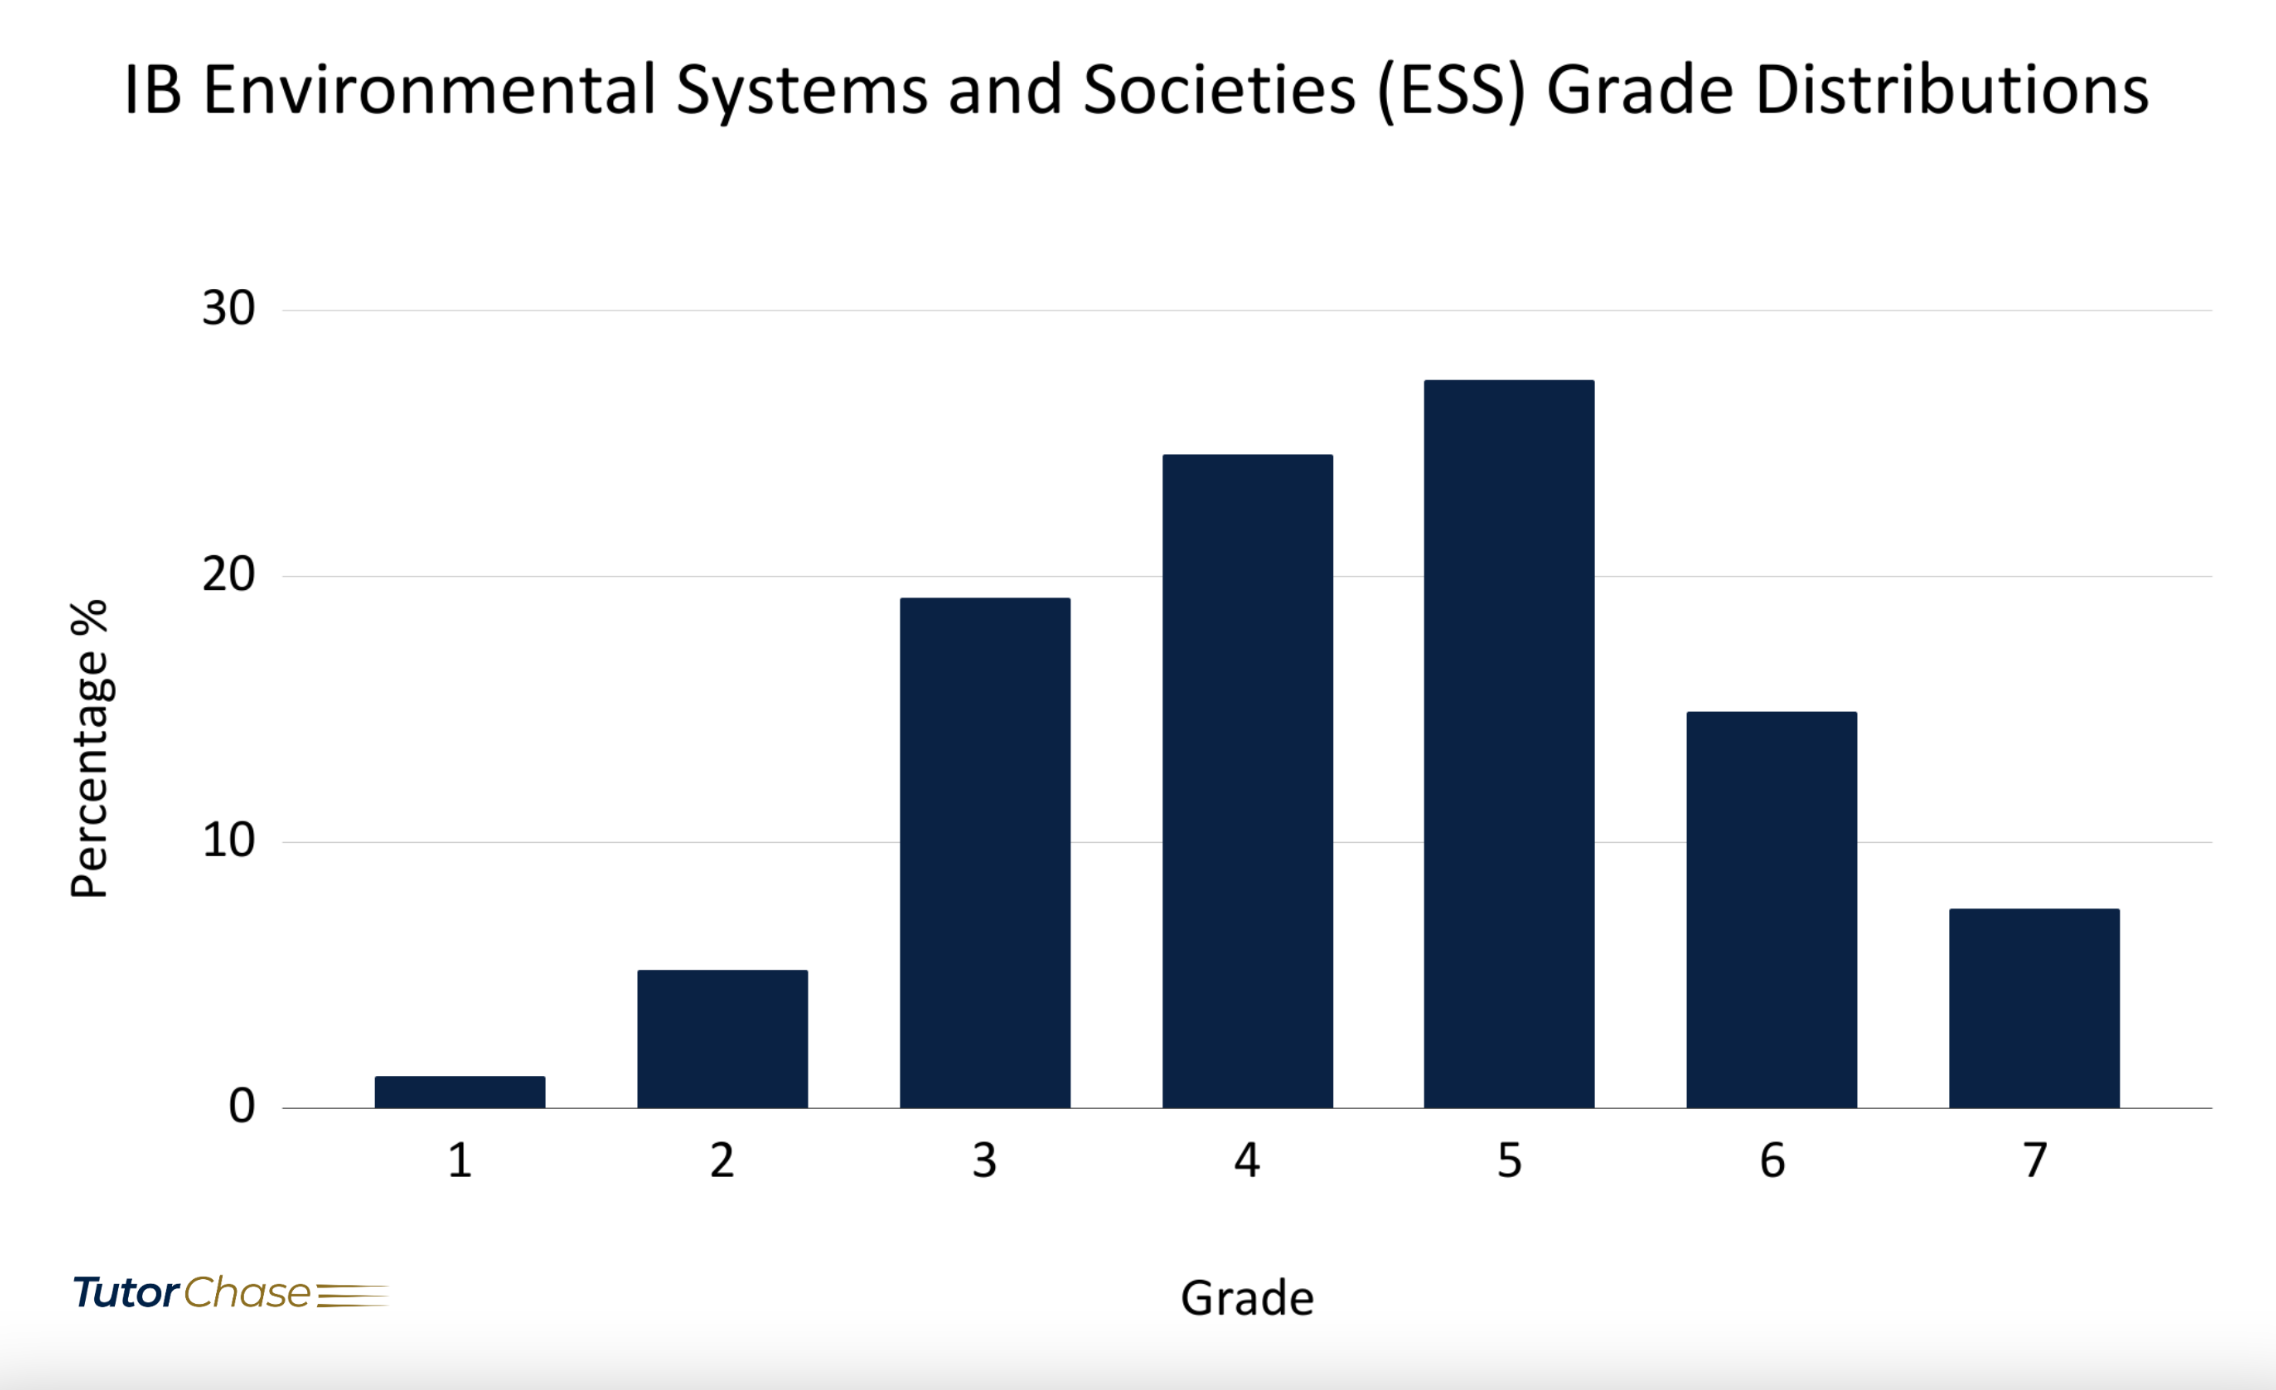 IB ESS grade distributions in 2021